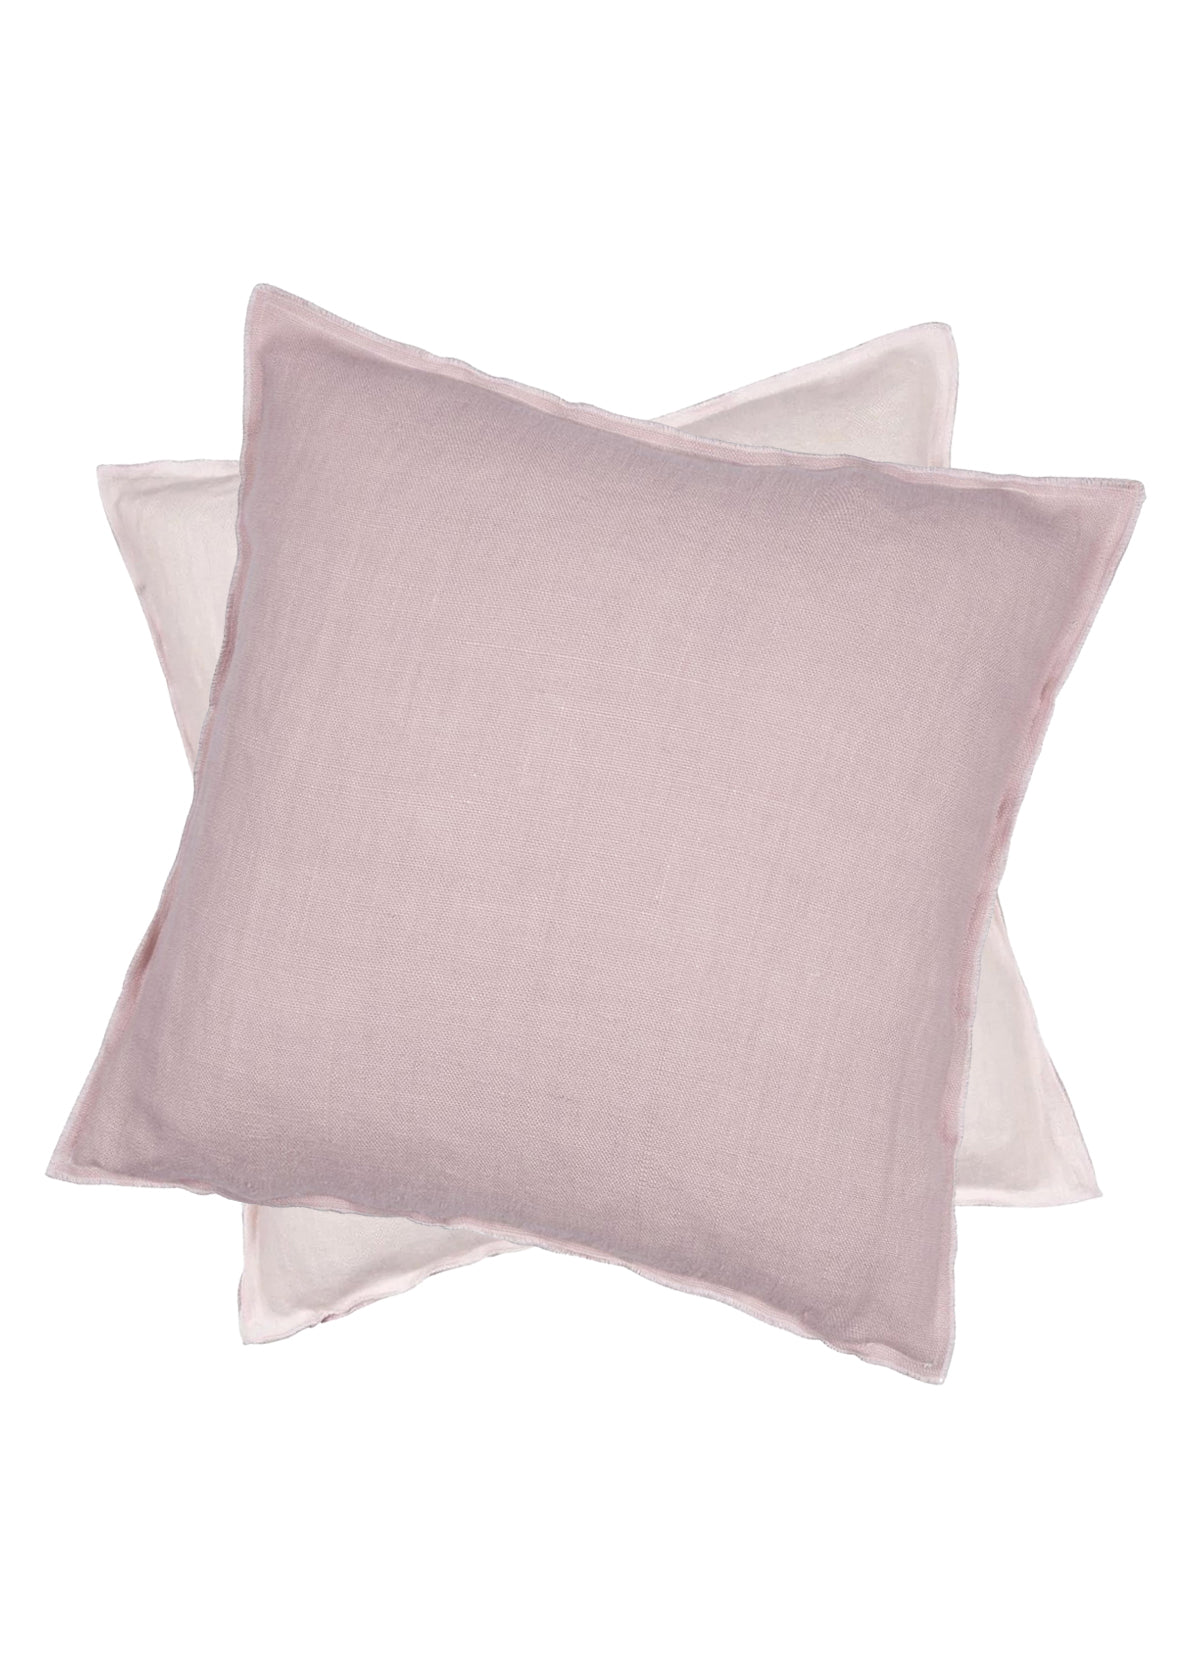 Brera Lino Pale Rose Cushion